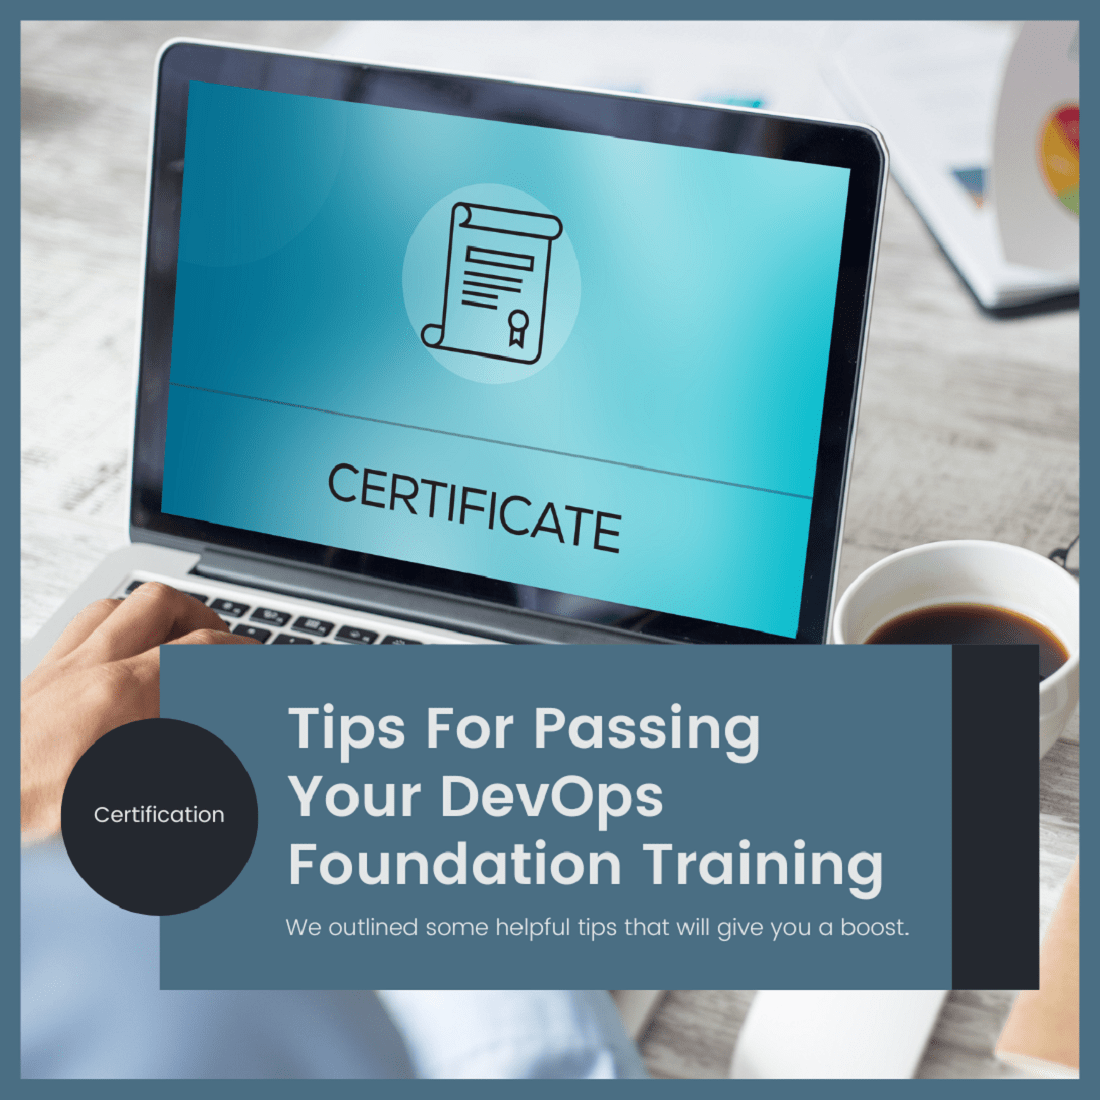 DevOps Foundation Training